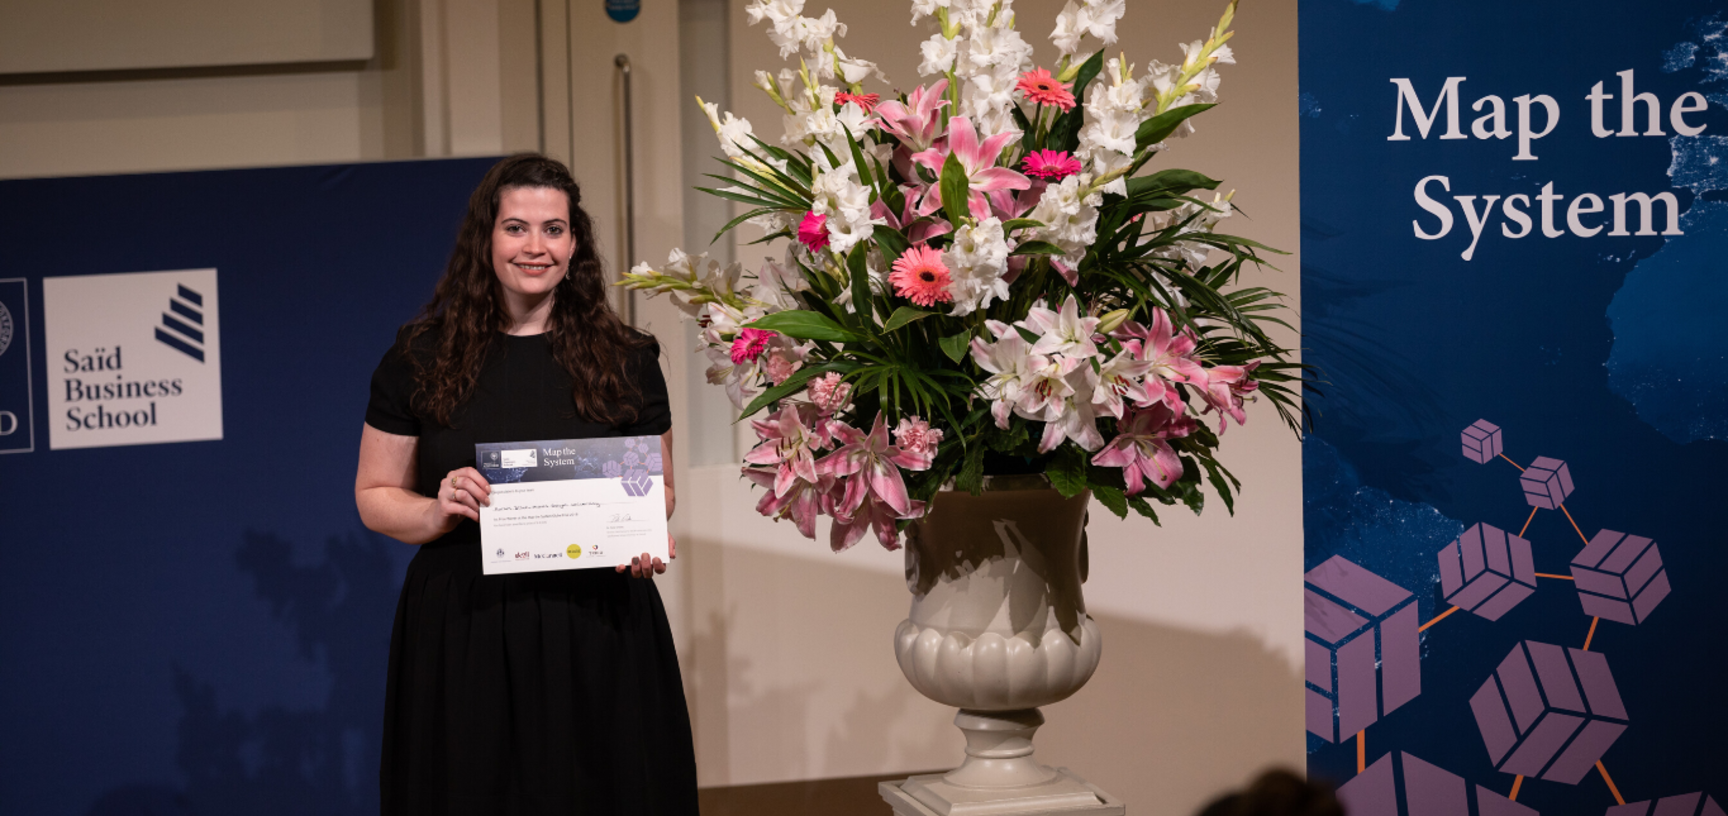 Roisin Dillon, Mount Royal University, holding Map the System 2018 Prize award